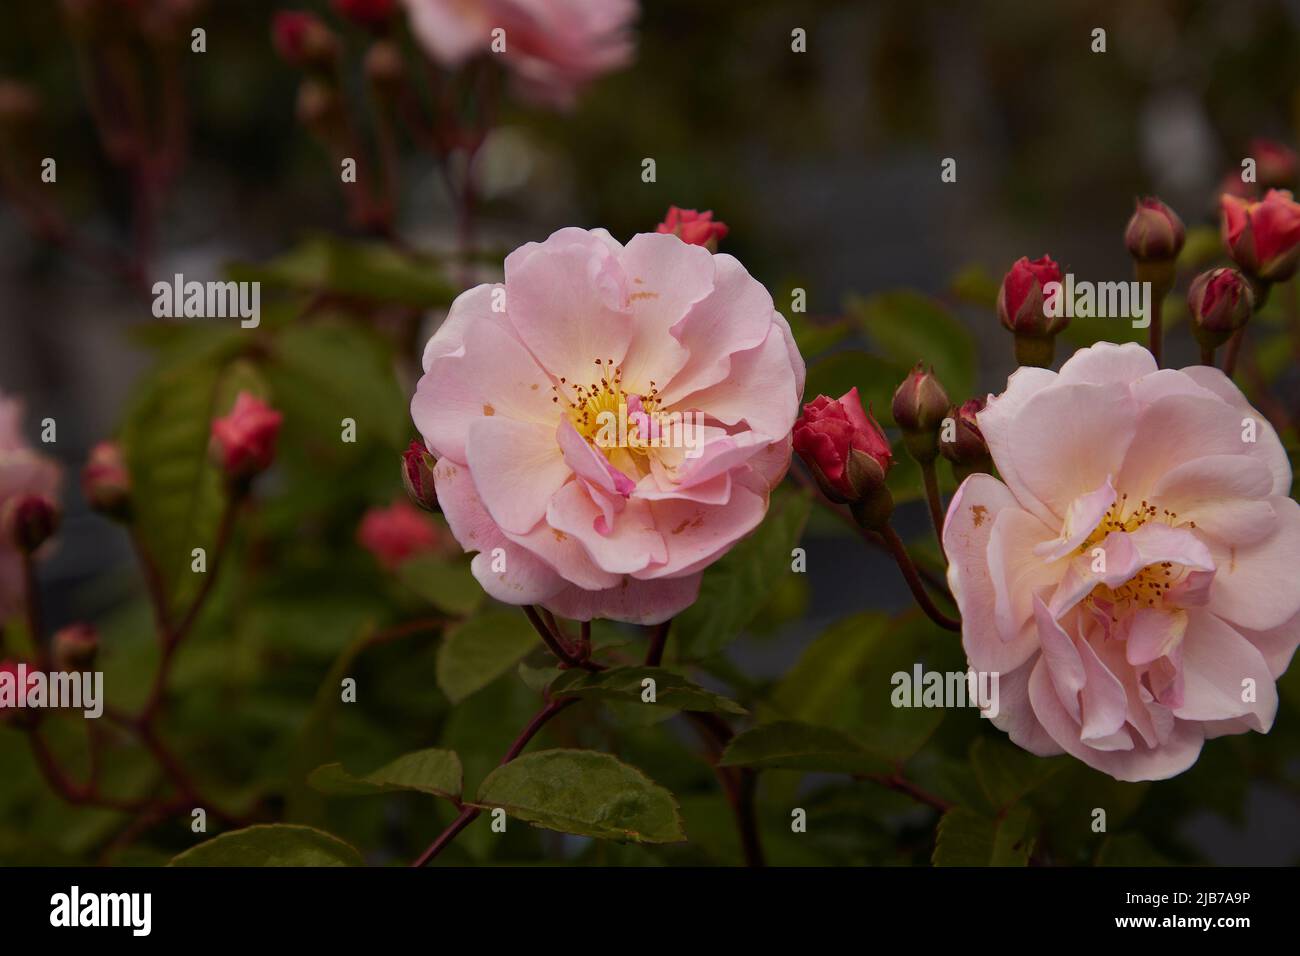 Close up of Rosa Felicia, shrub rose, seen outdoors in the garden. Stock Photo